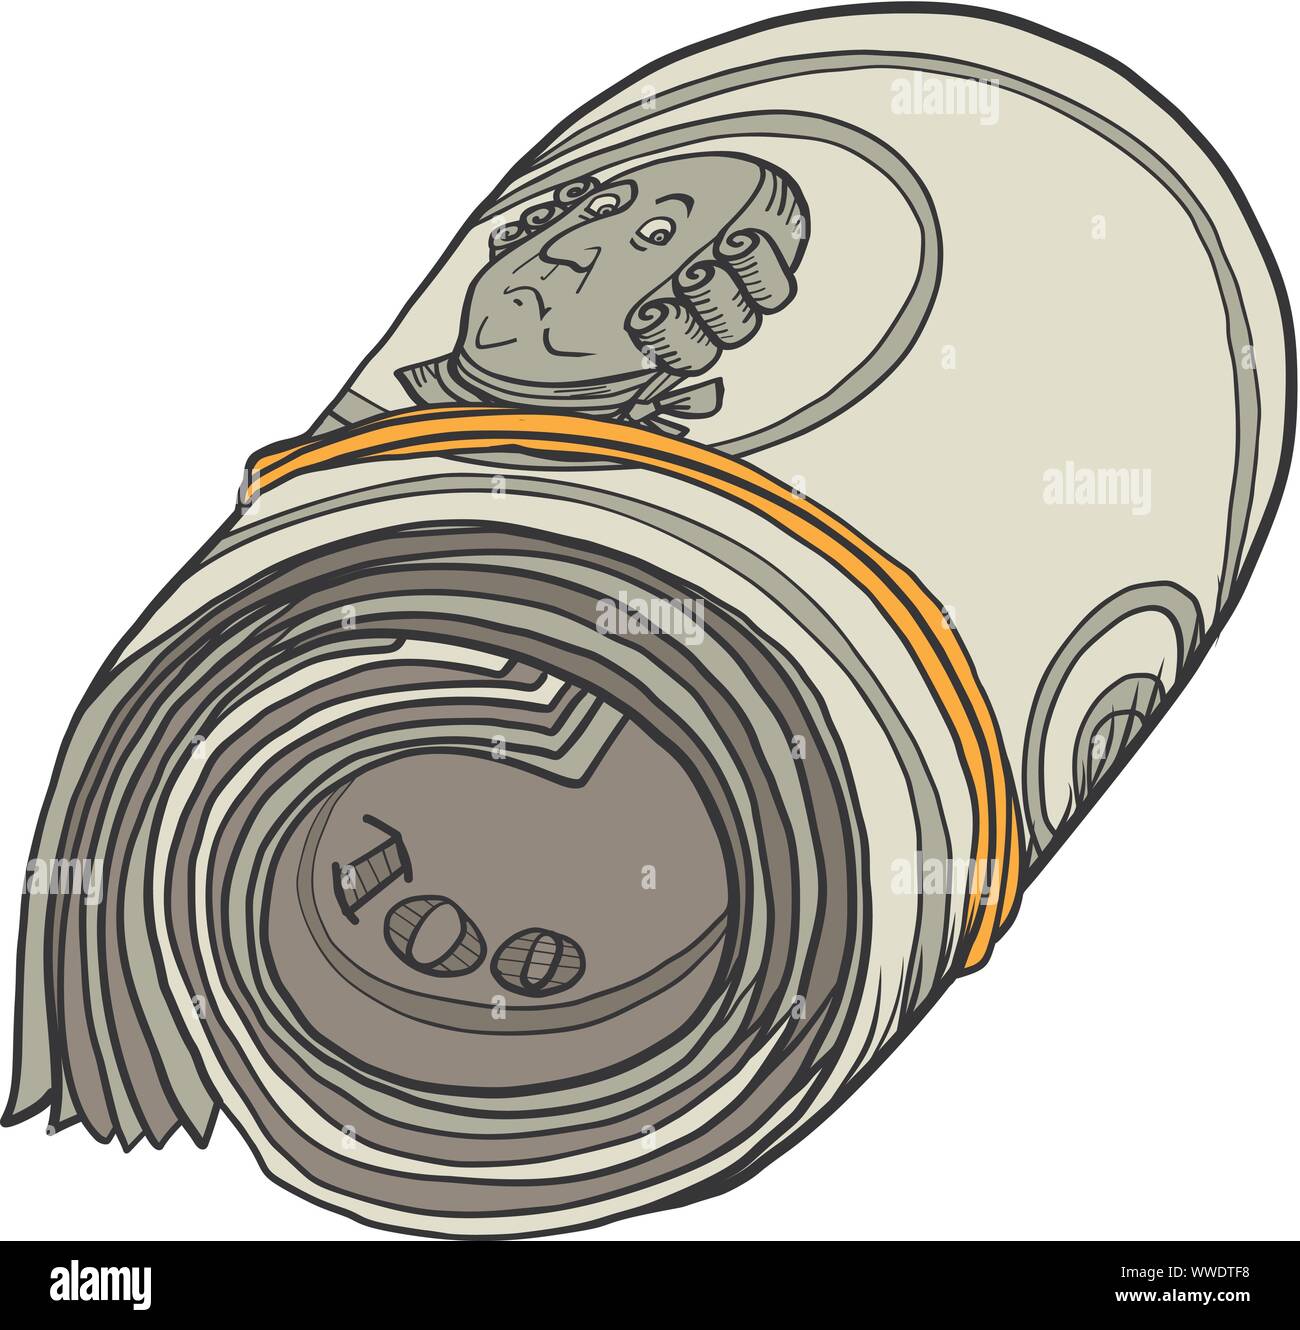 Einhundert dollar Bündel Banknoten Kaugummi. Benjamin Franklin. Comic cartoon Pop Art retro Vektor illustration Zeichnung Stock Vektor